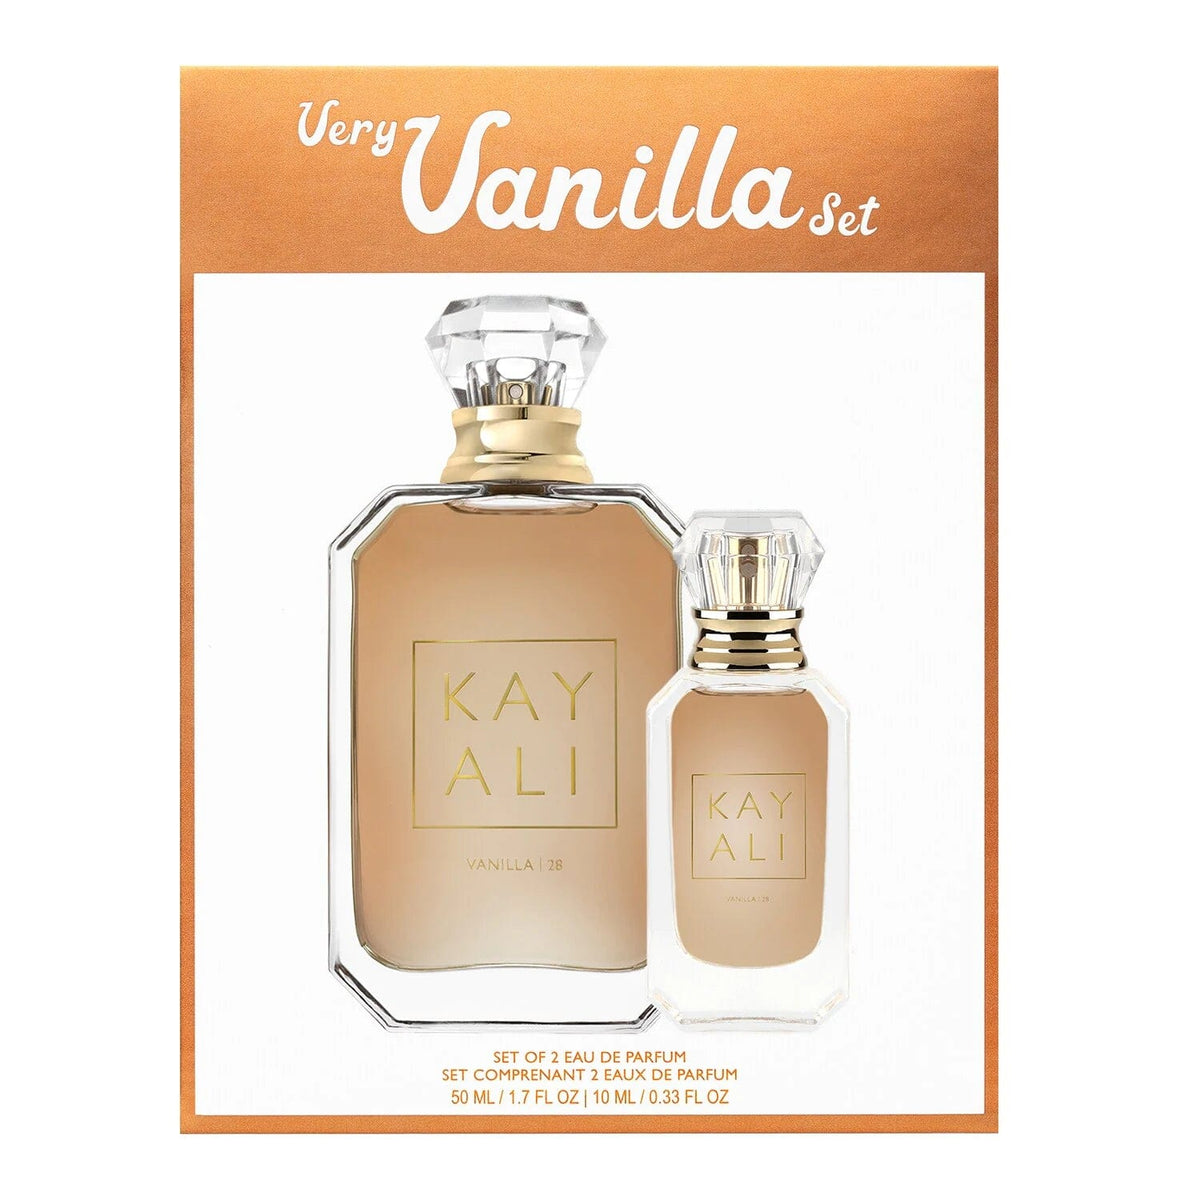 Kayali バニラ 50 vanilla 【日本未発売】 14210円引き sandorobotics.com